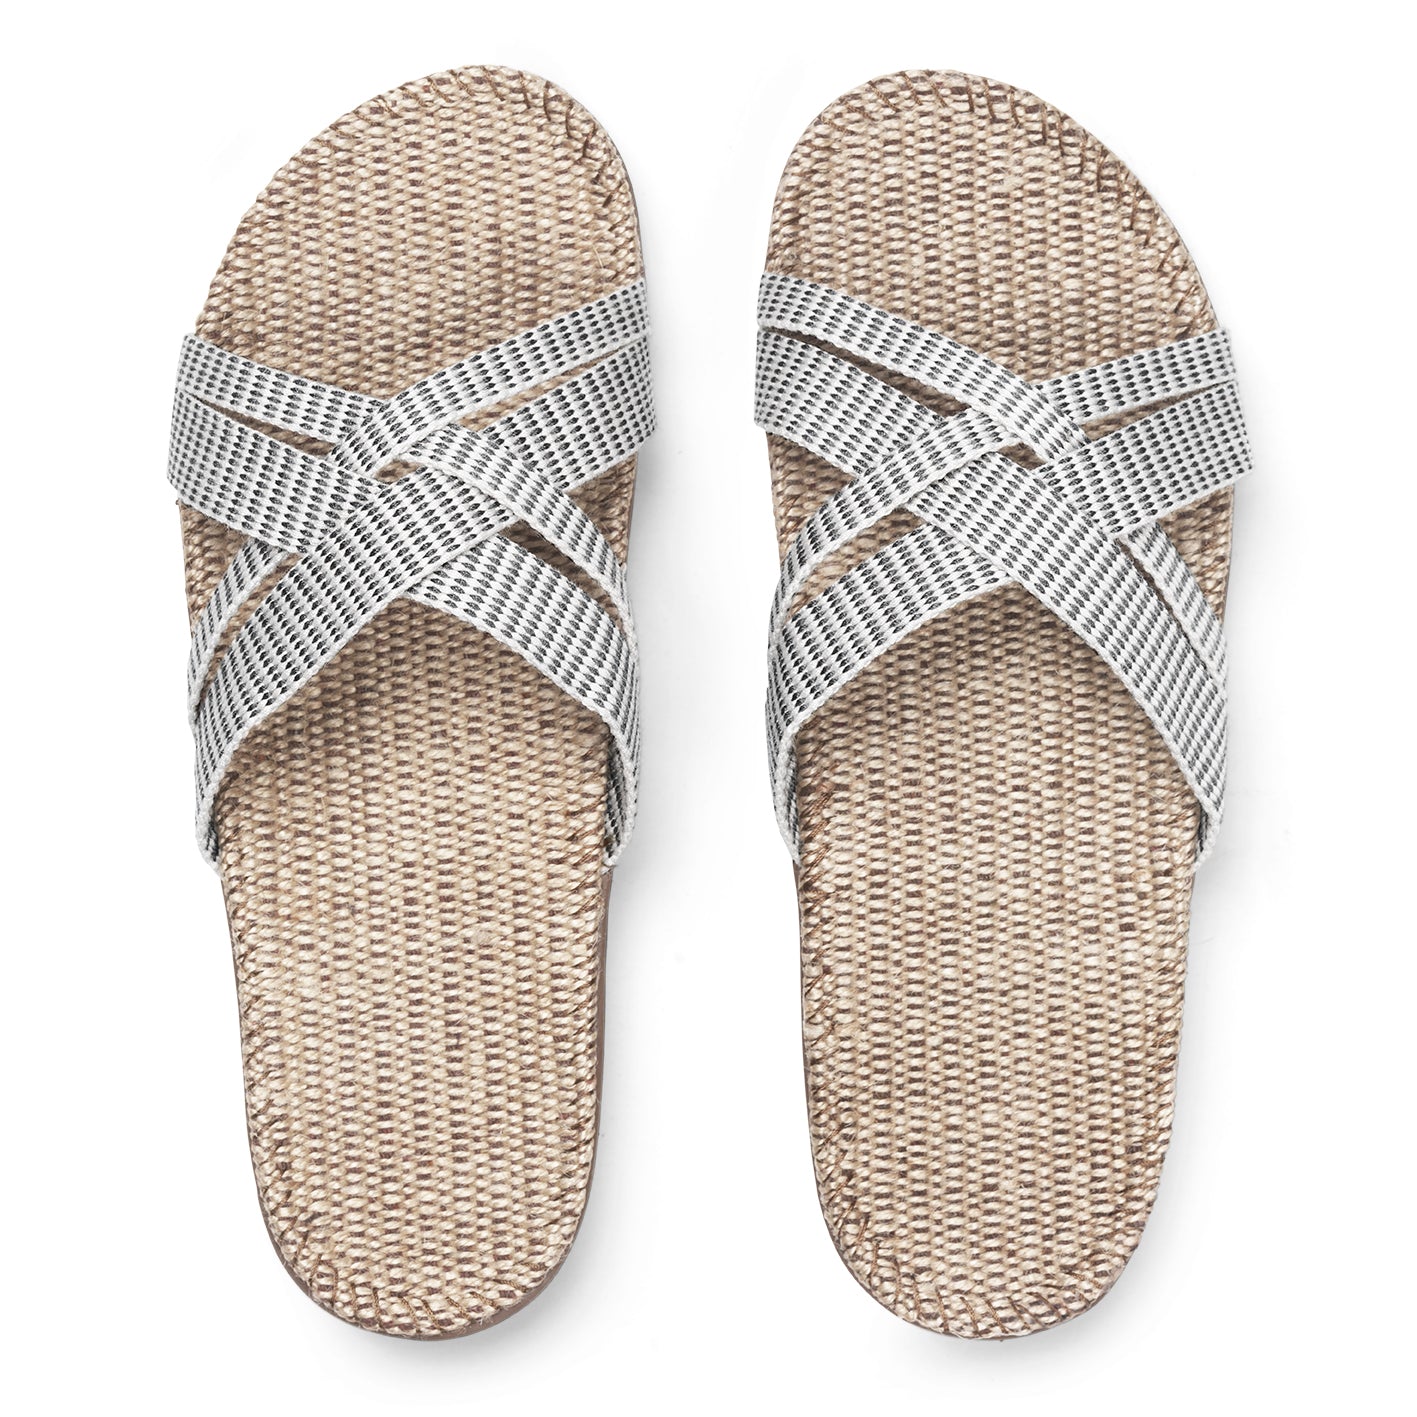 Shangies sandals - White stripes